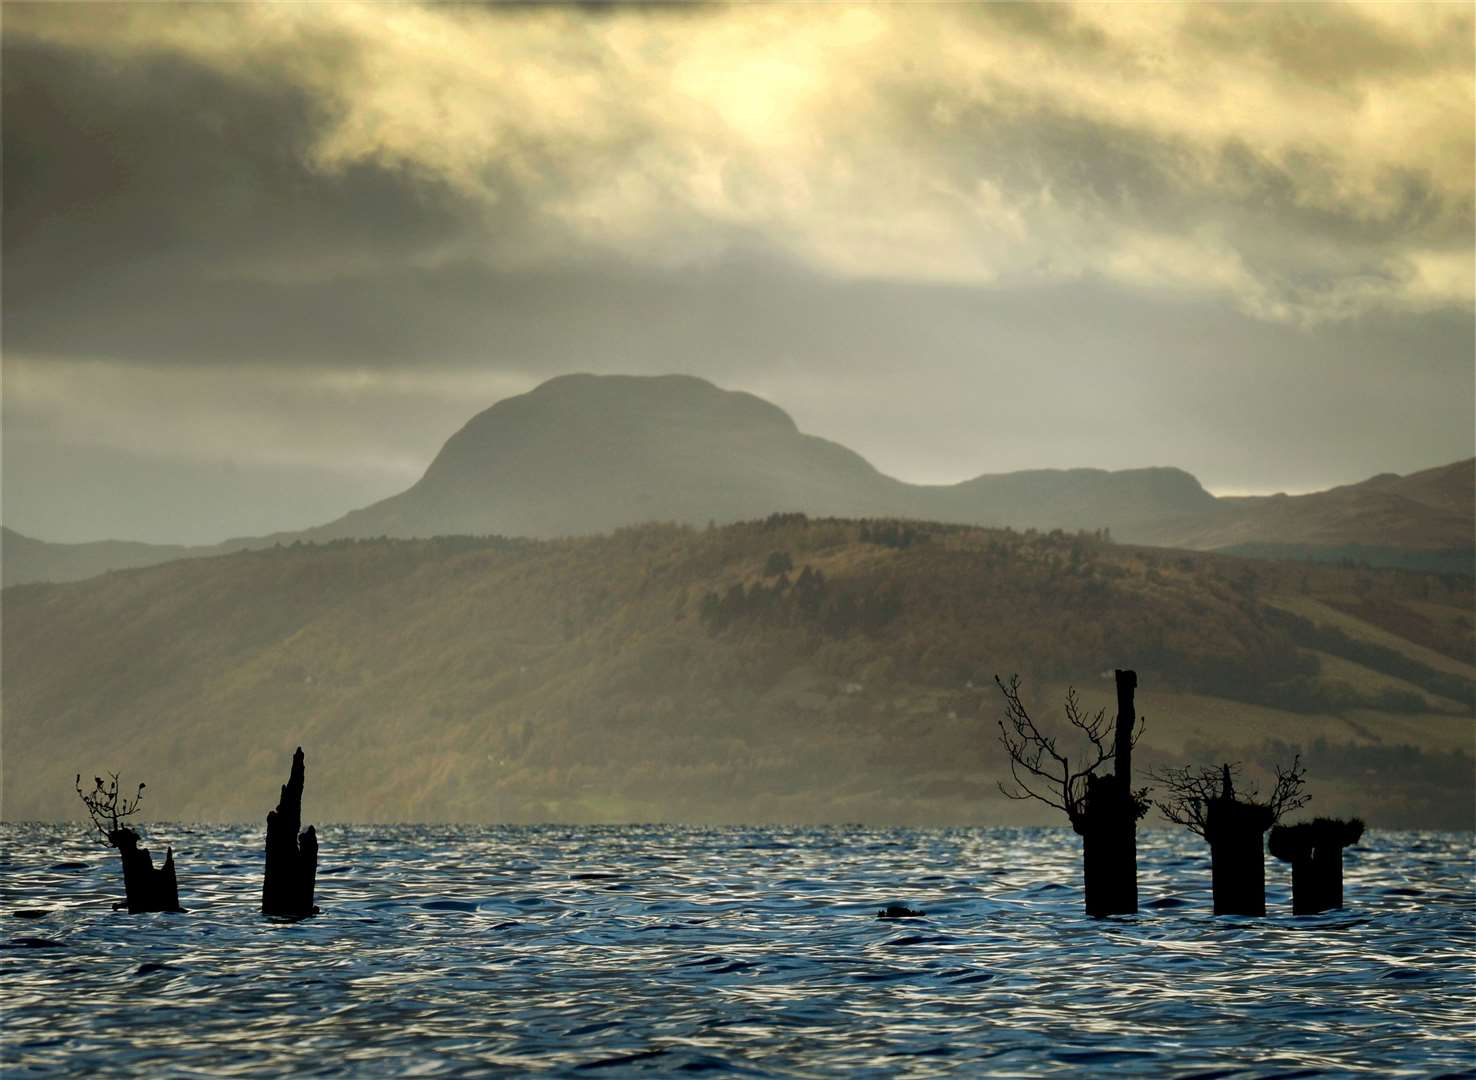 Dores is a village beside Loch Ness.